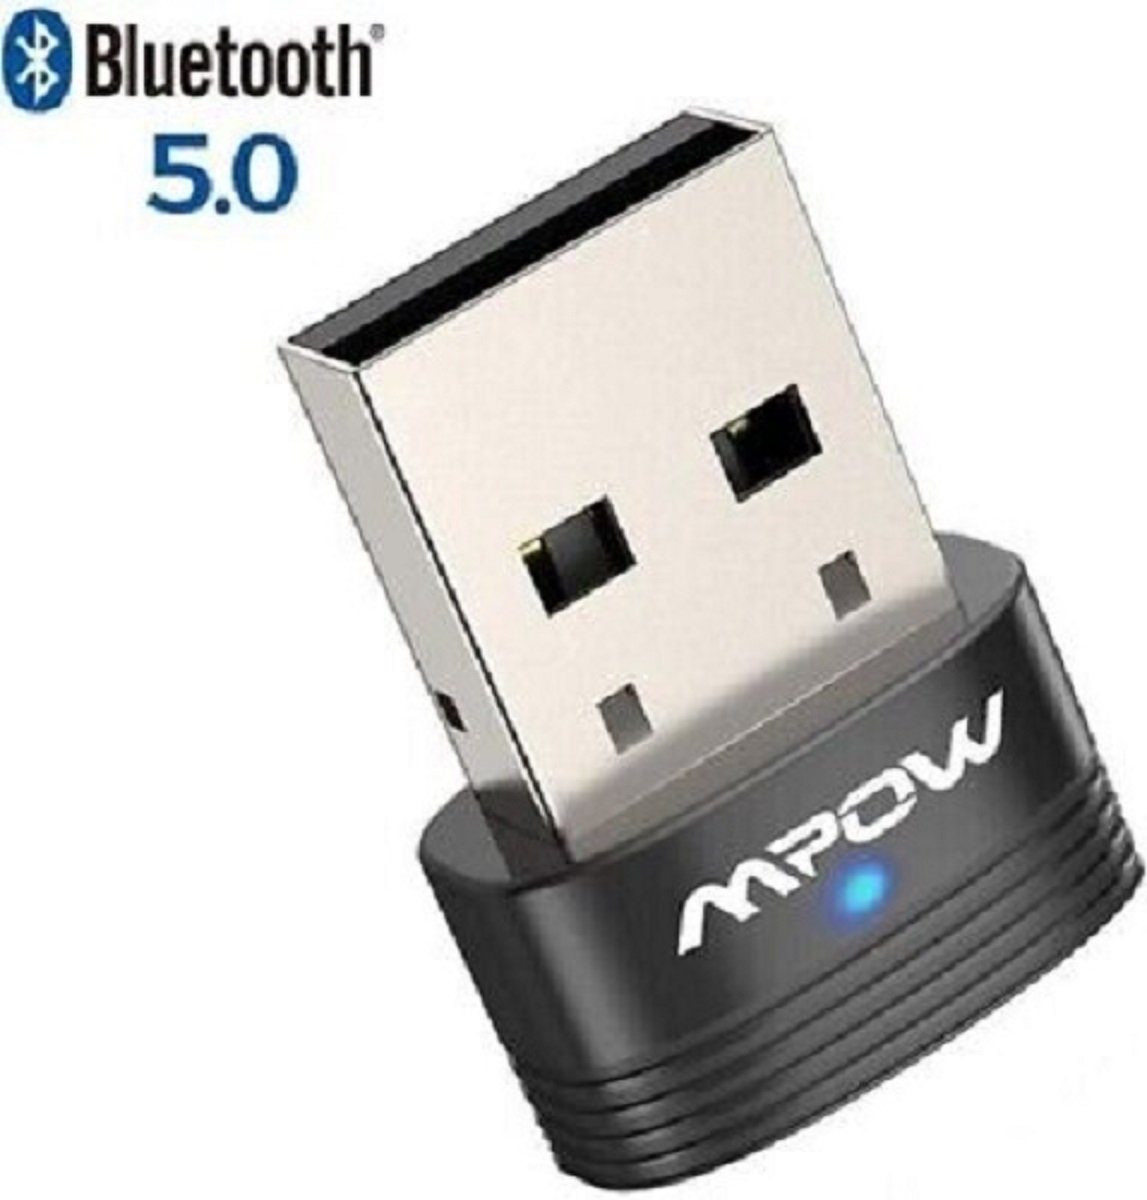 Mpow Bluetooth®-Sender Bluetooth USB Sender 5.0 Empfänger Dongle